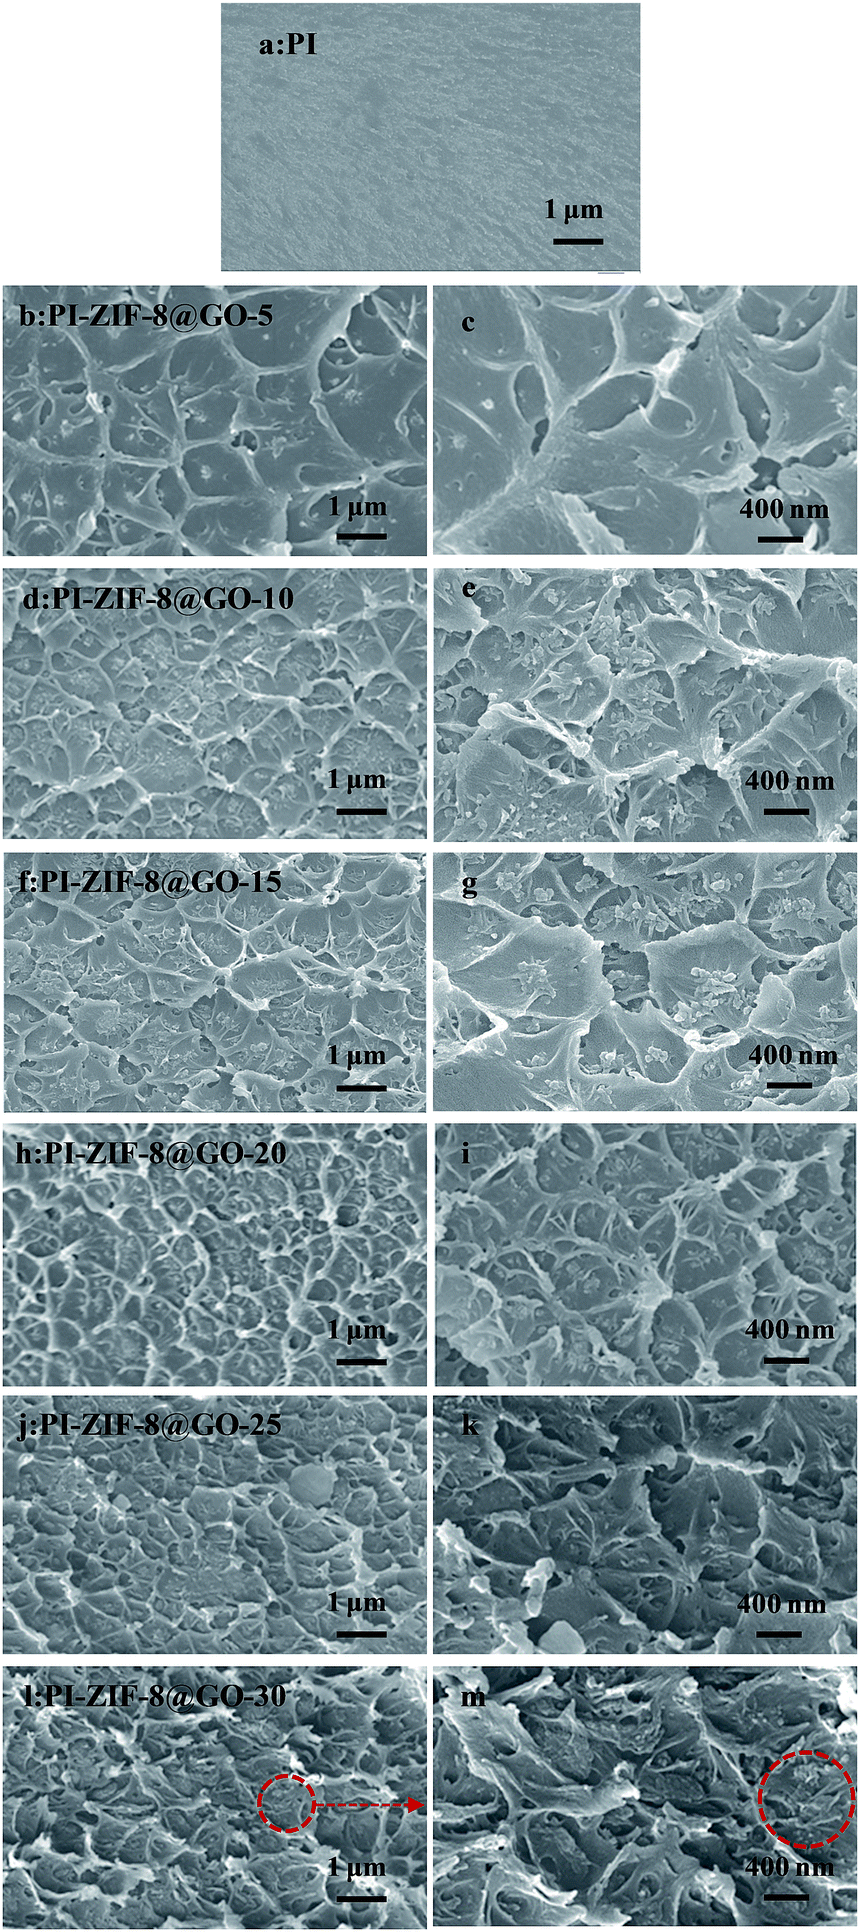 Synergistic Effects Of Zeolite Imidazole Framework Graphene Oxide Composites In Humidified Mixed Matrix Membranes On Co 2 Separation Rsc Advances Rsc Publishing Doi 10 1039 C7rah